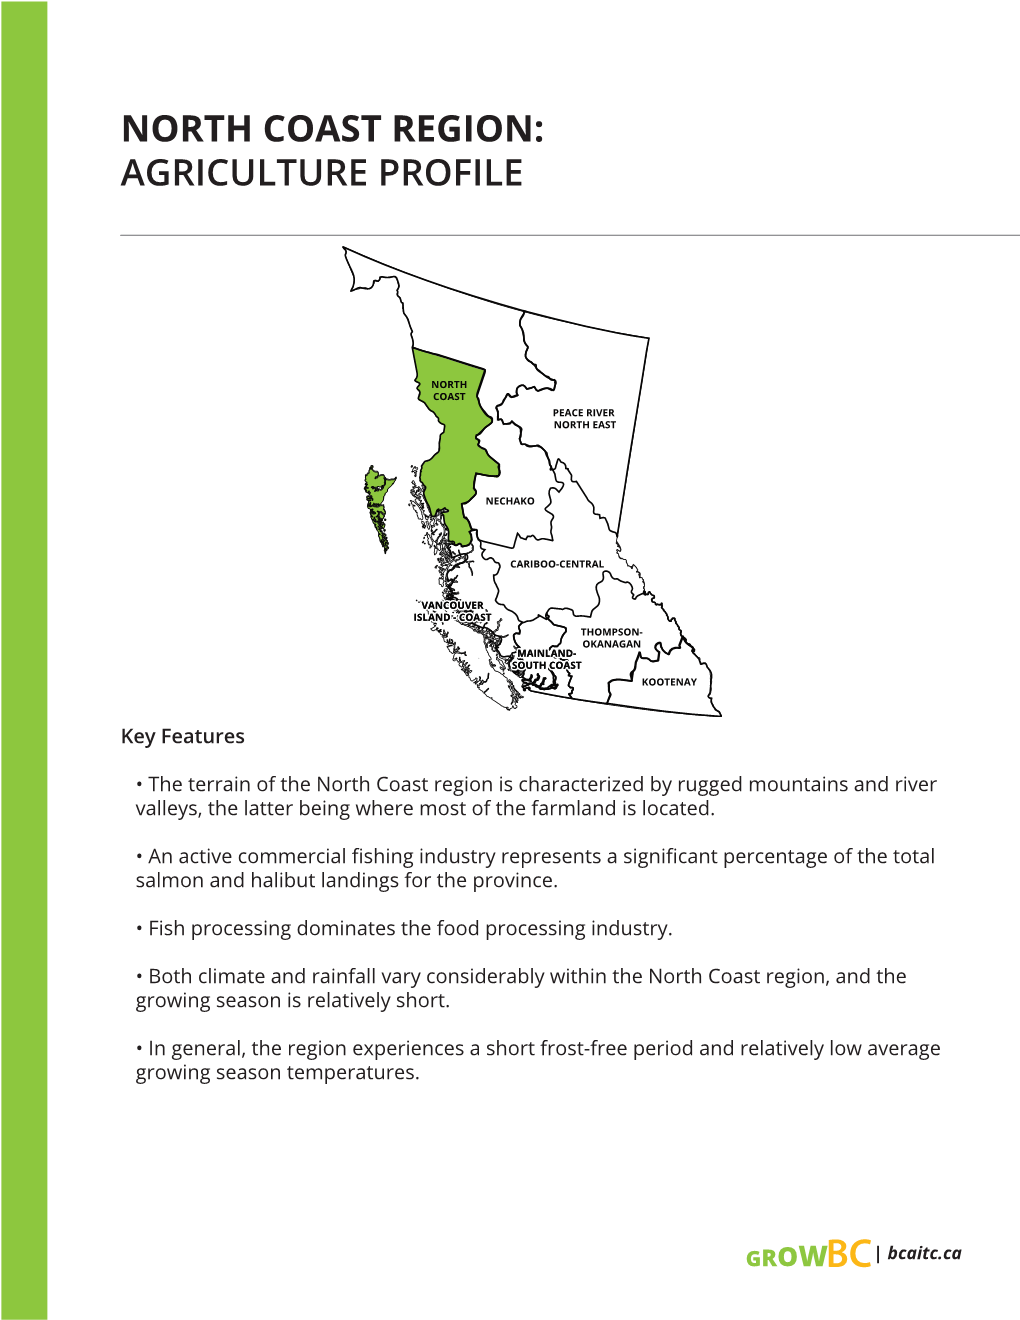 North Coast Region: Agriculture Profile